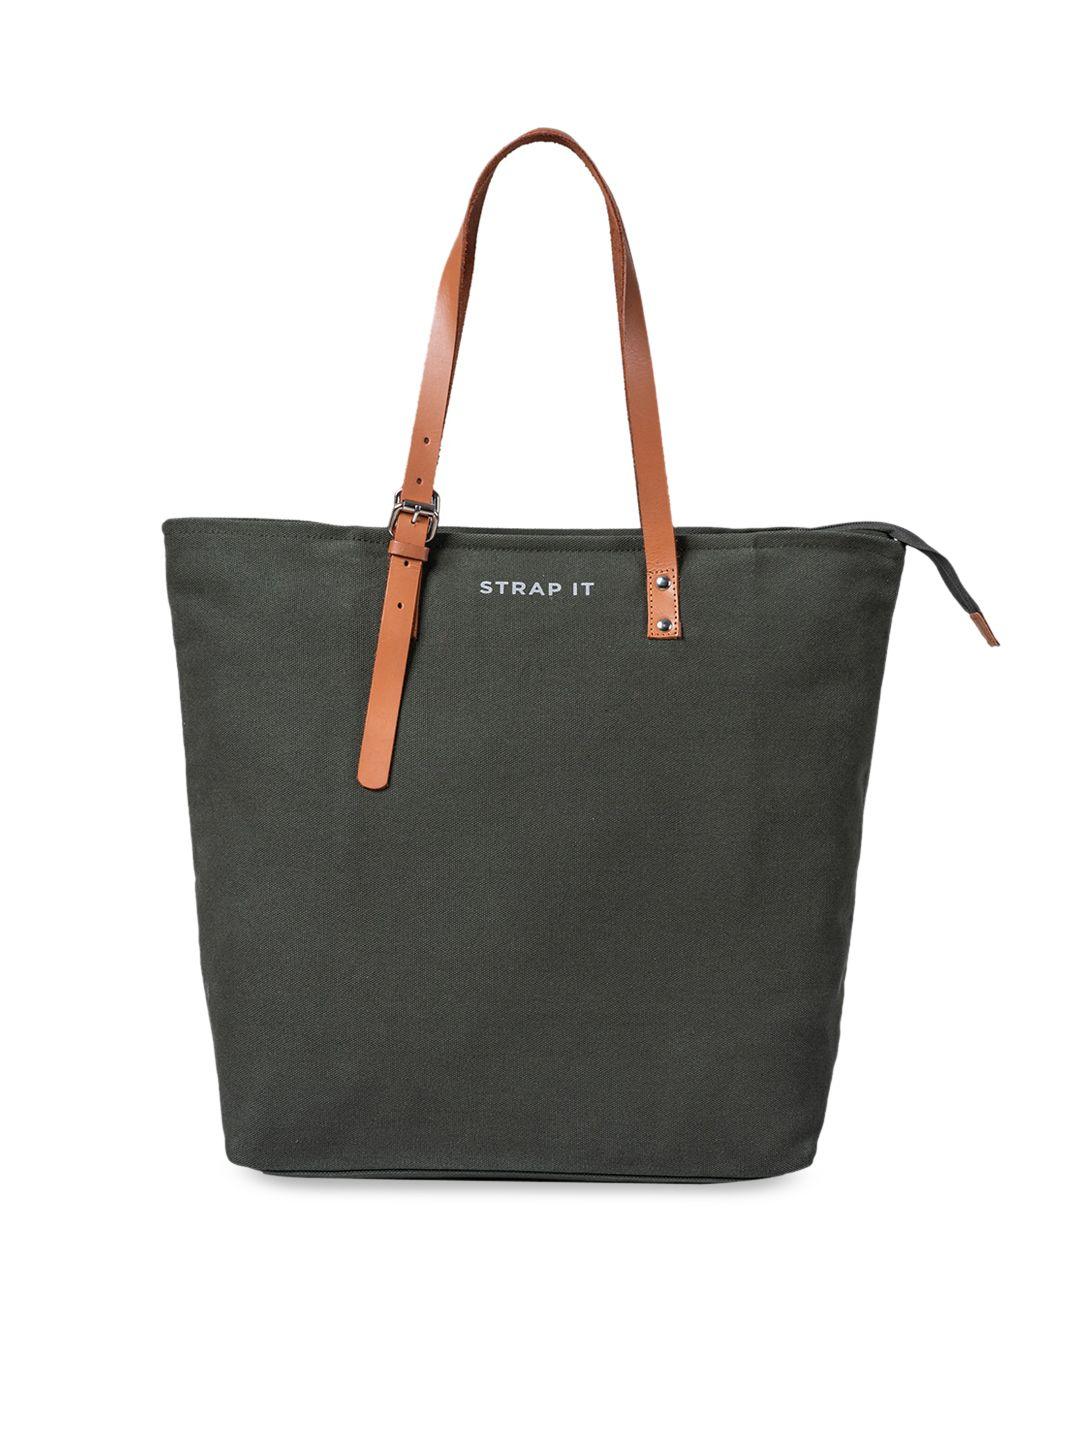 strap it olive green shopper tote bag